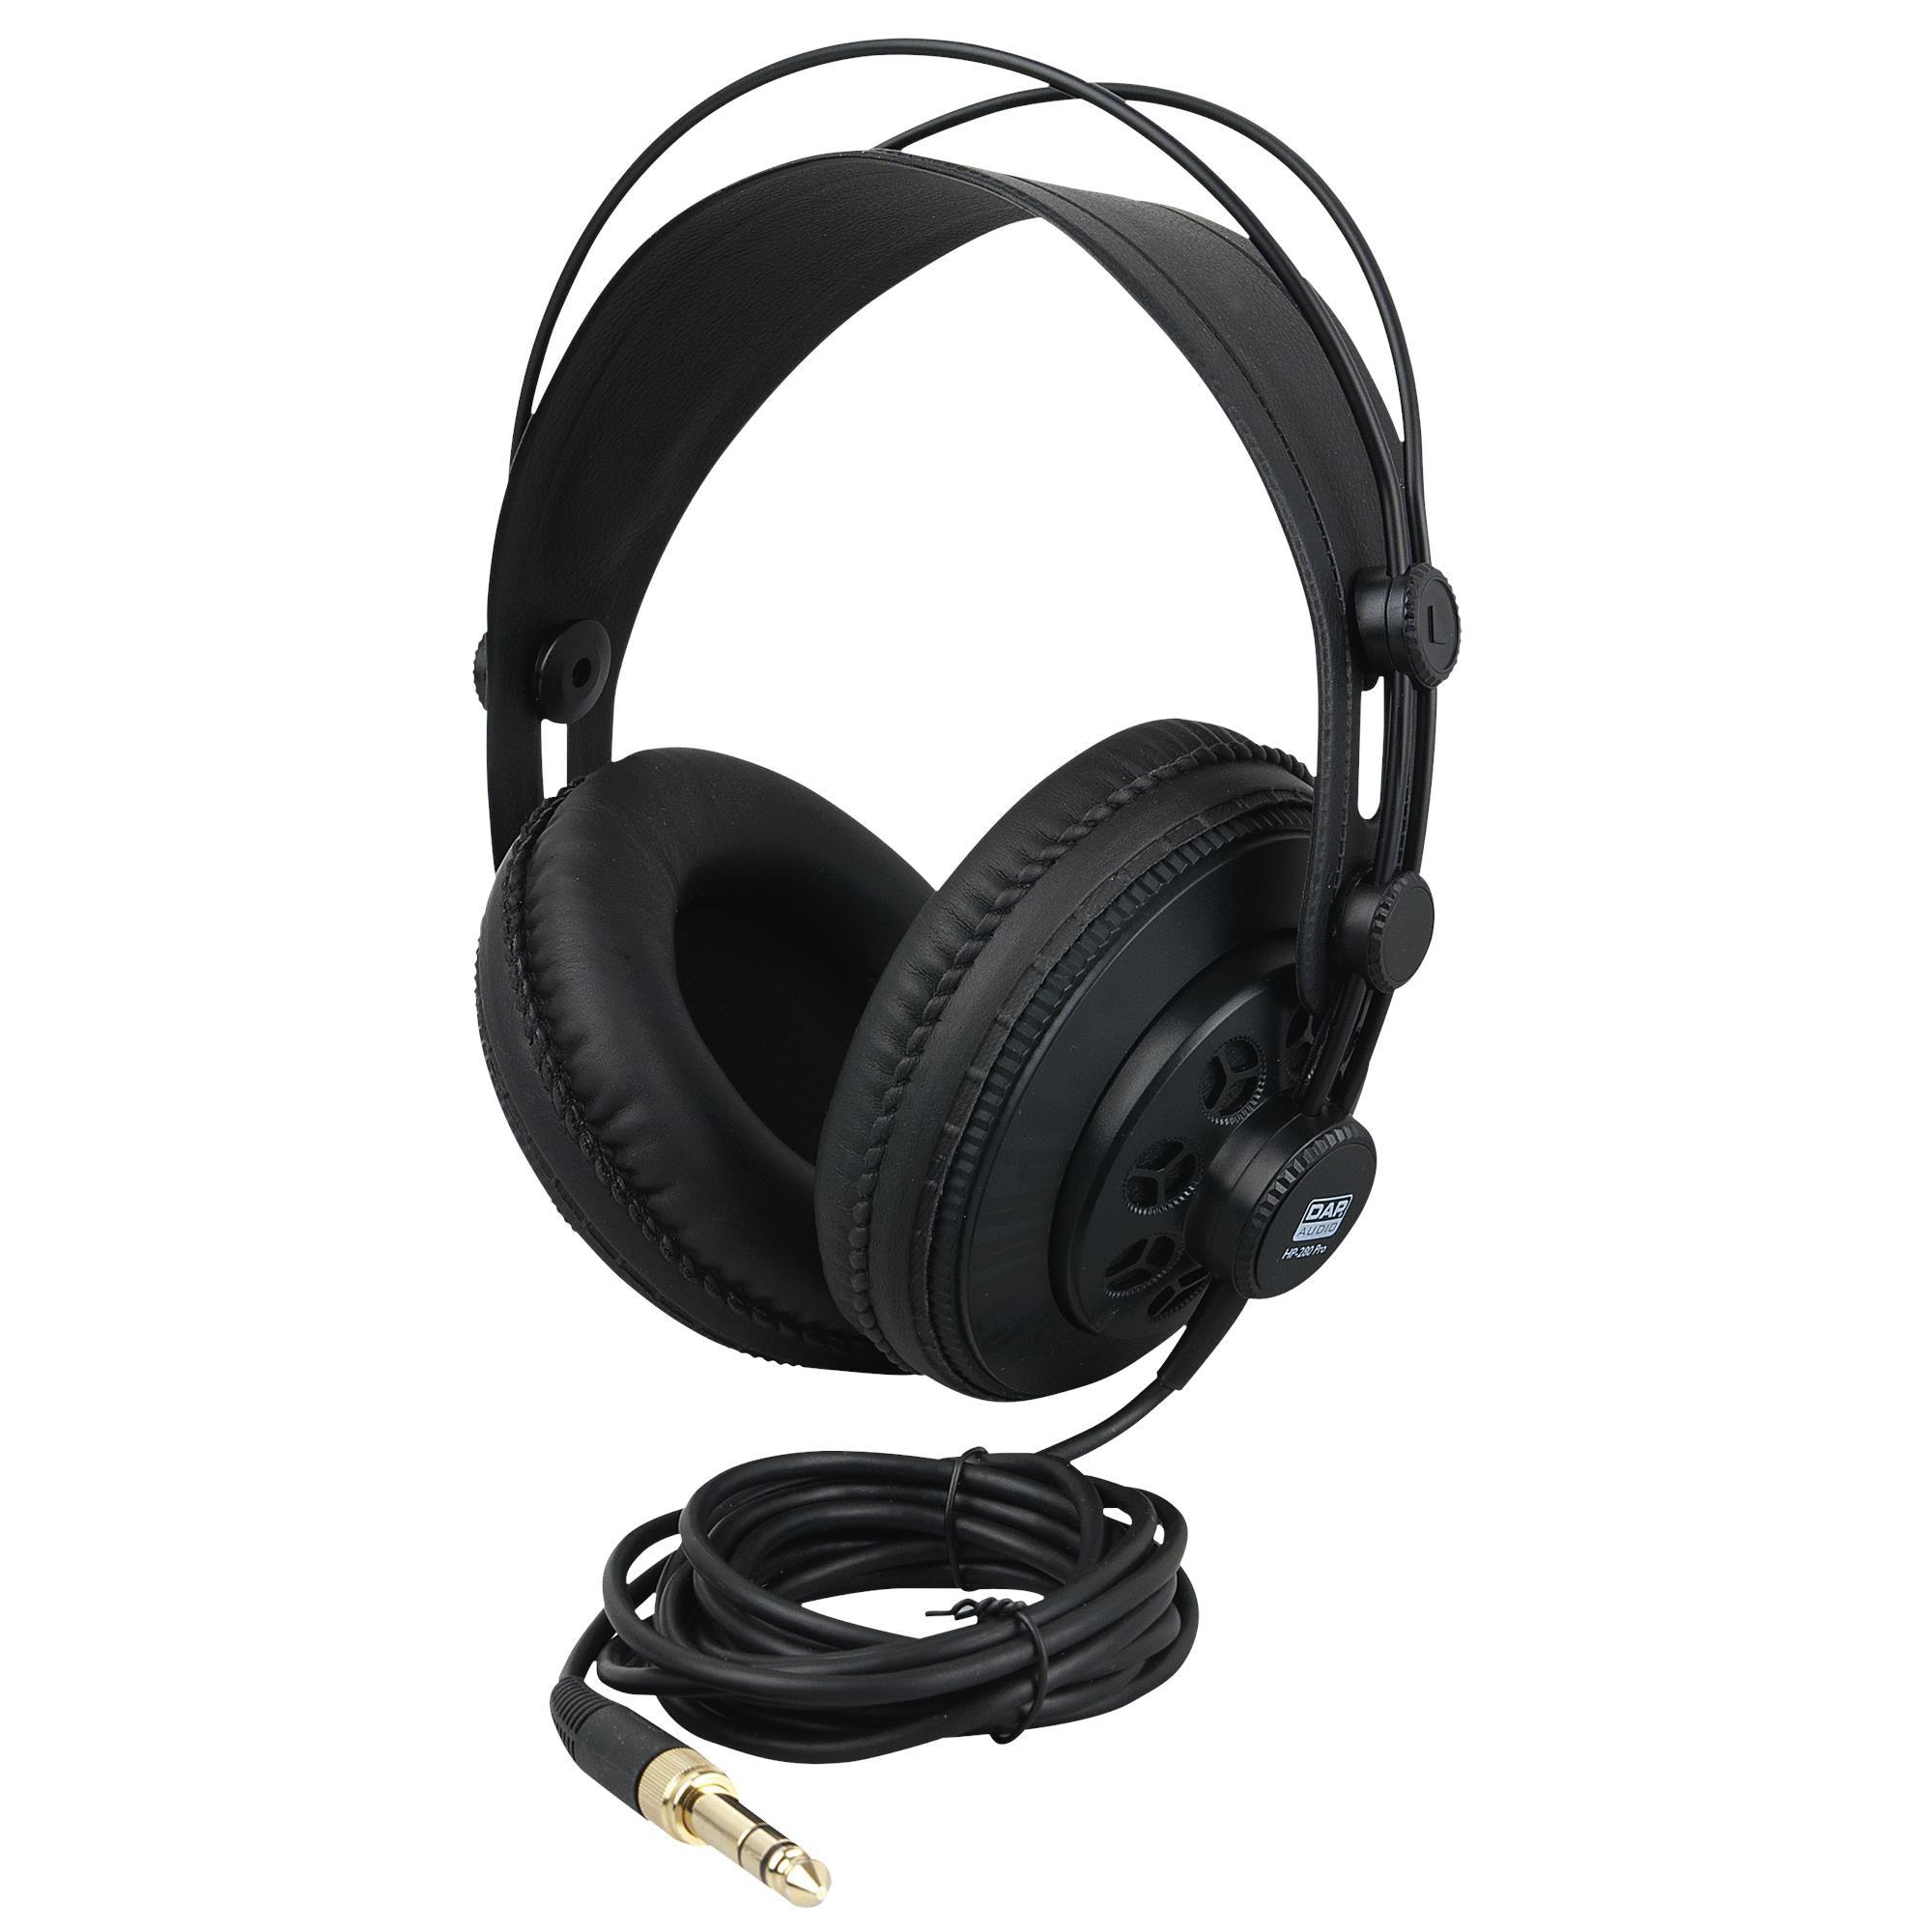 DAP HP-280 Pro Semi-open studio headphones - DY Pro Audio